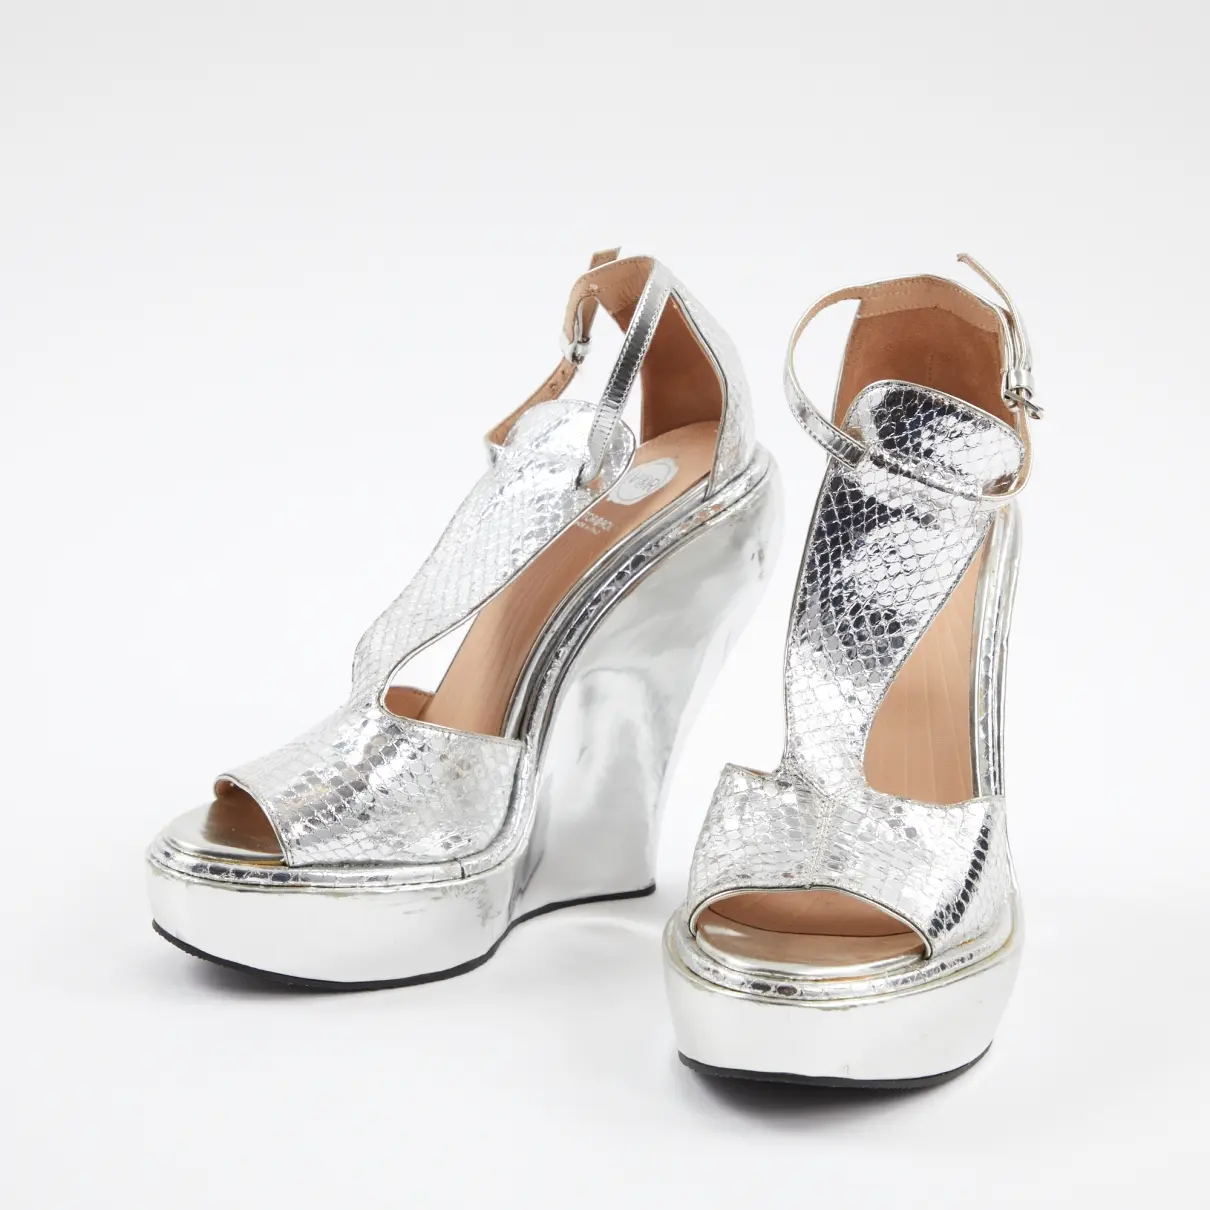 Viktor & Rolf Patent leather heels for sale